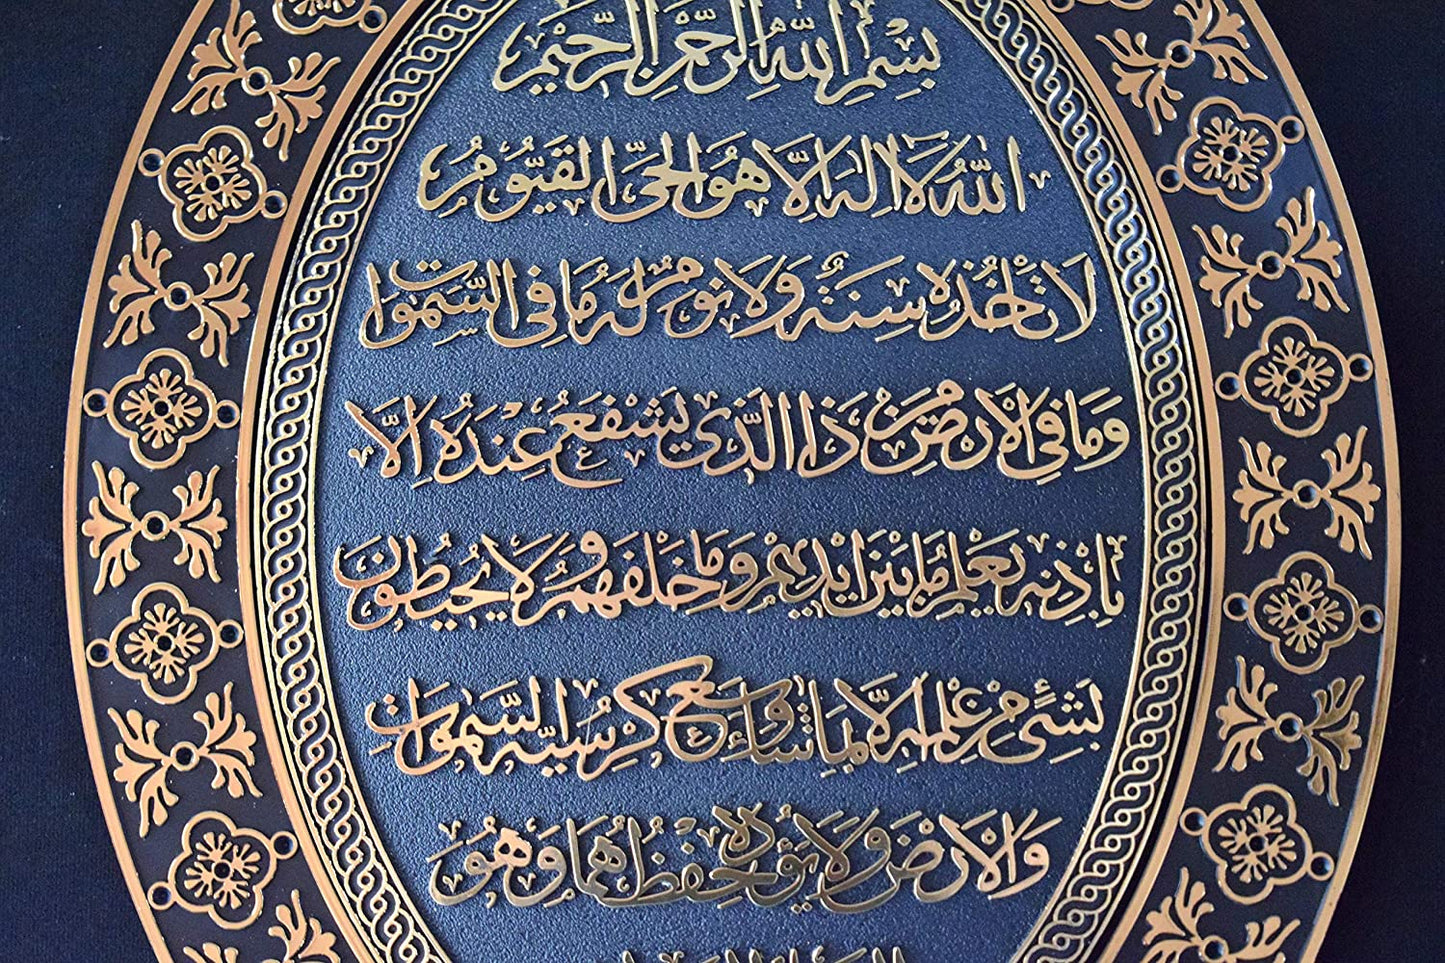 Islamic Wall Frame Muslim Home DÉCOR VELEVT Coated Frame Ayat AL KURSI 16 inch * 12 inch